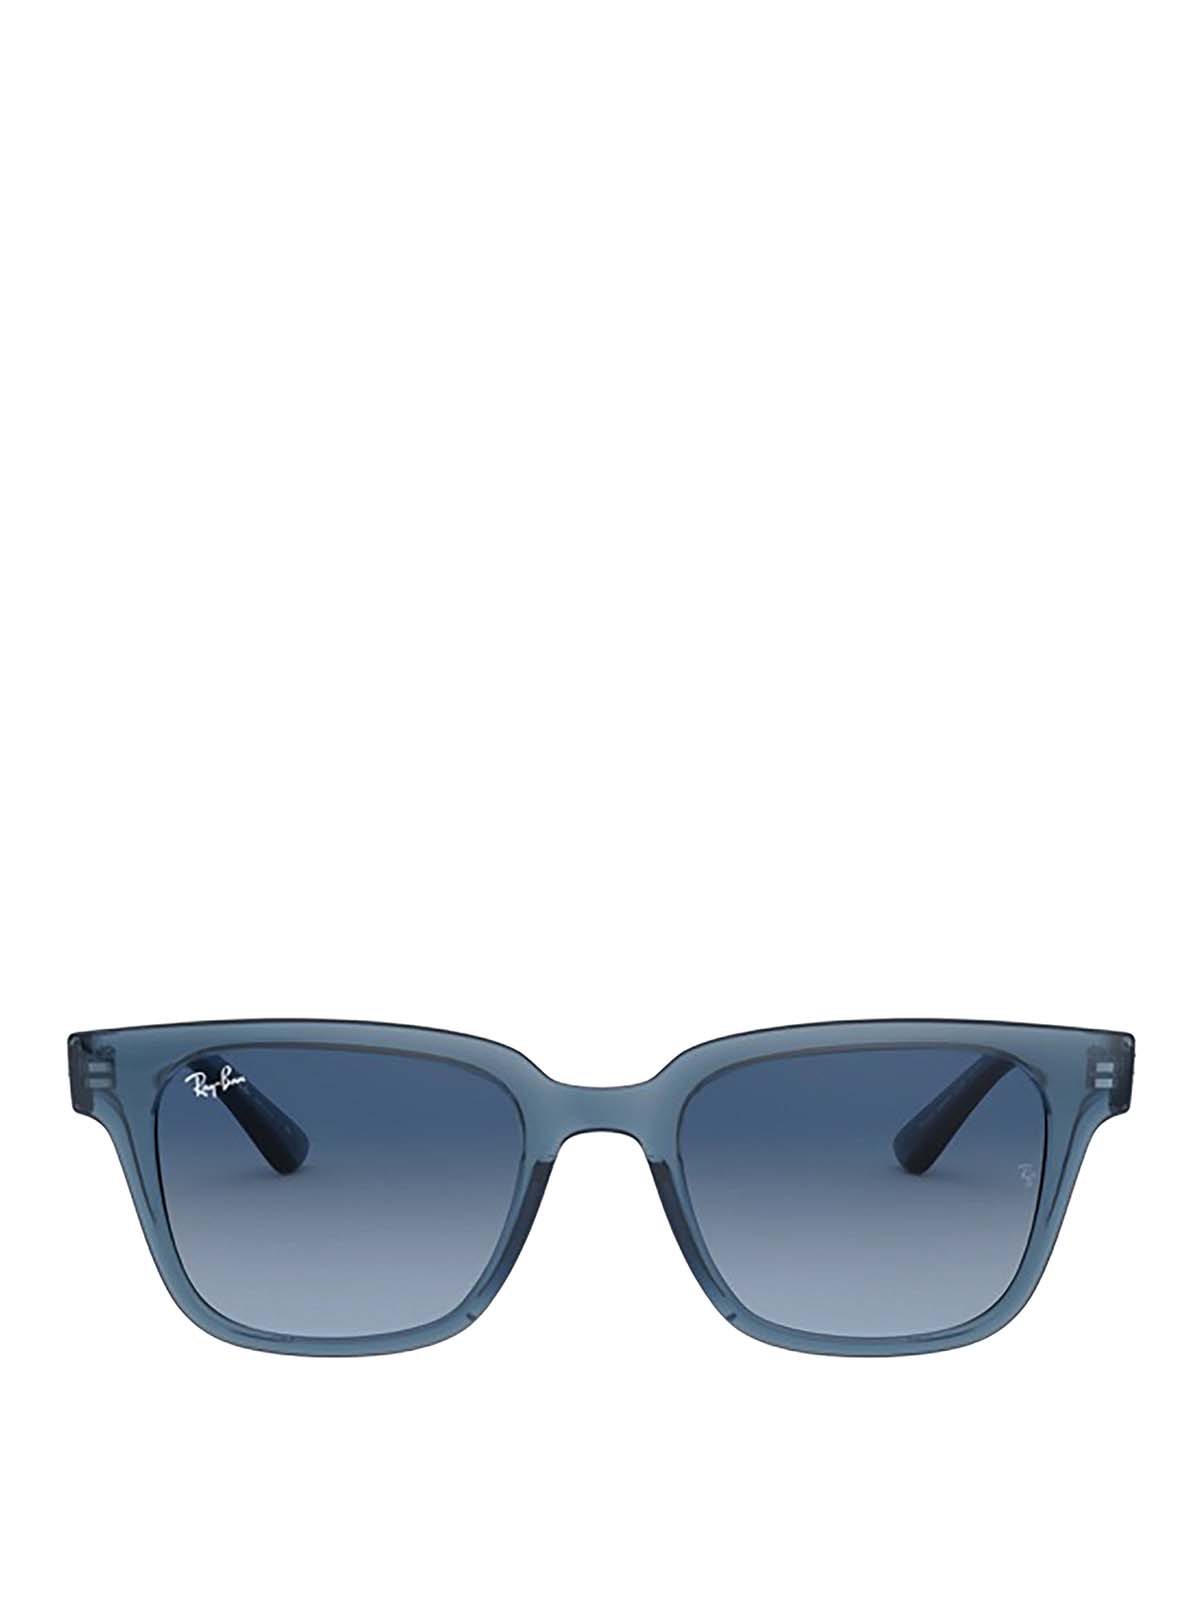 Sunglasses Ray Ban - RB4323 transparent blue sunglasses - RB43236448Q8